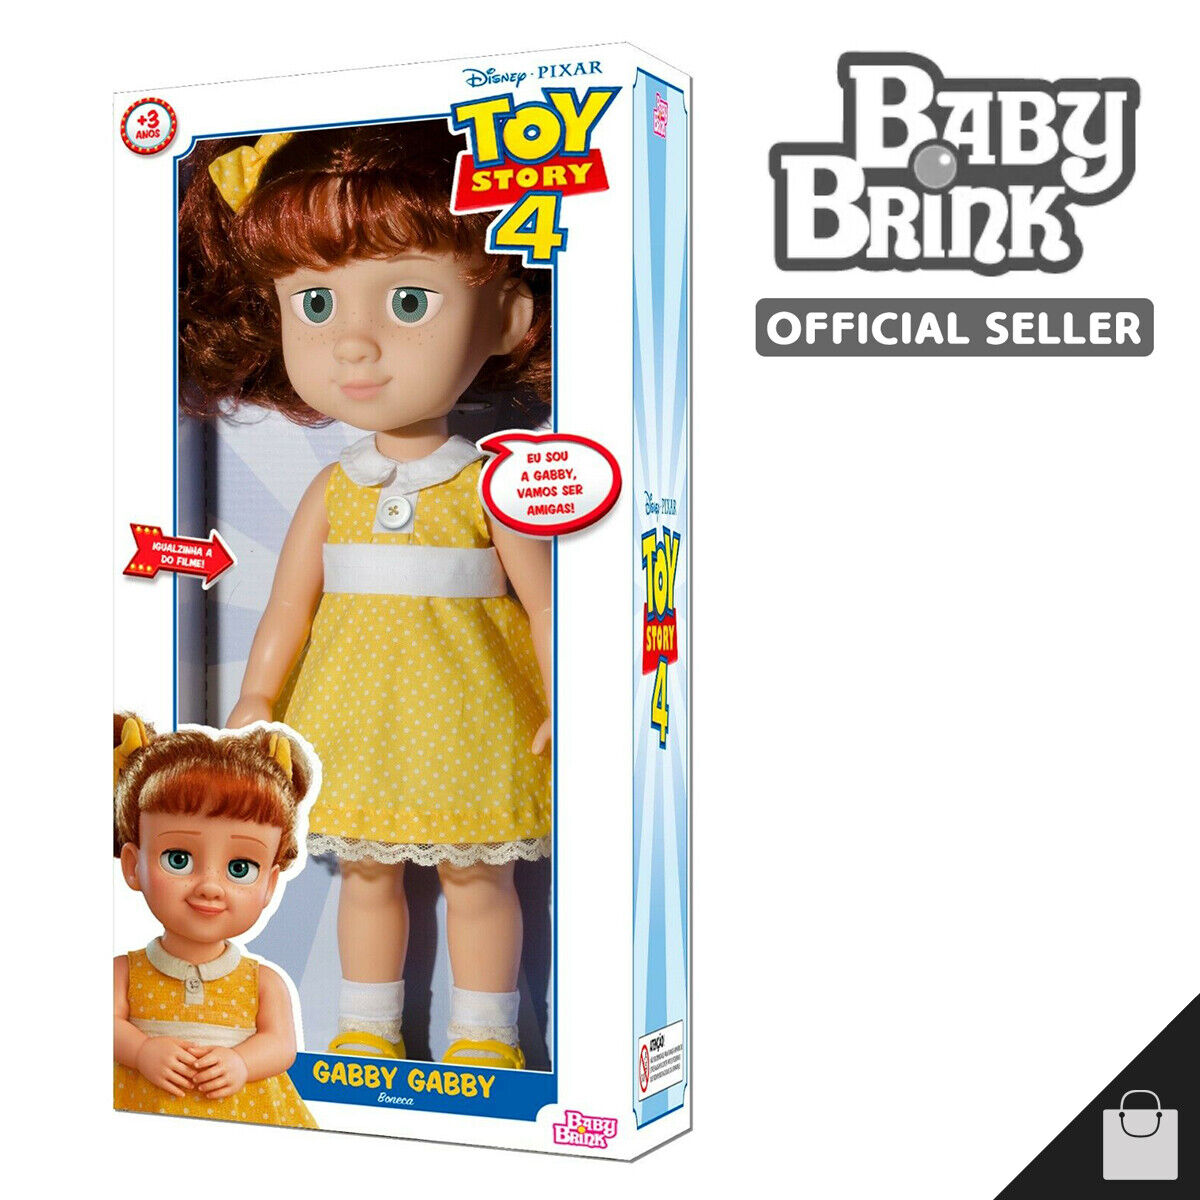 Gabby Gabby Doll Life Size Toy Story 4 Disney Pixar MOC MIB Figure (Last Units)